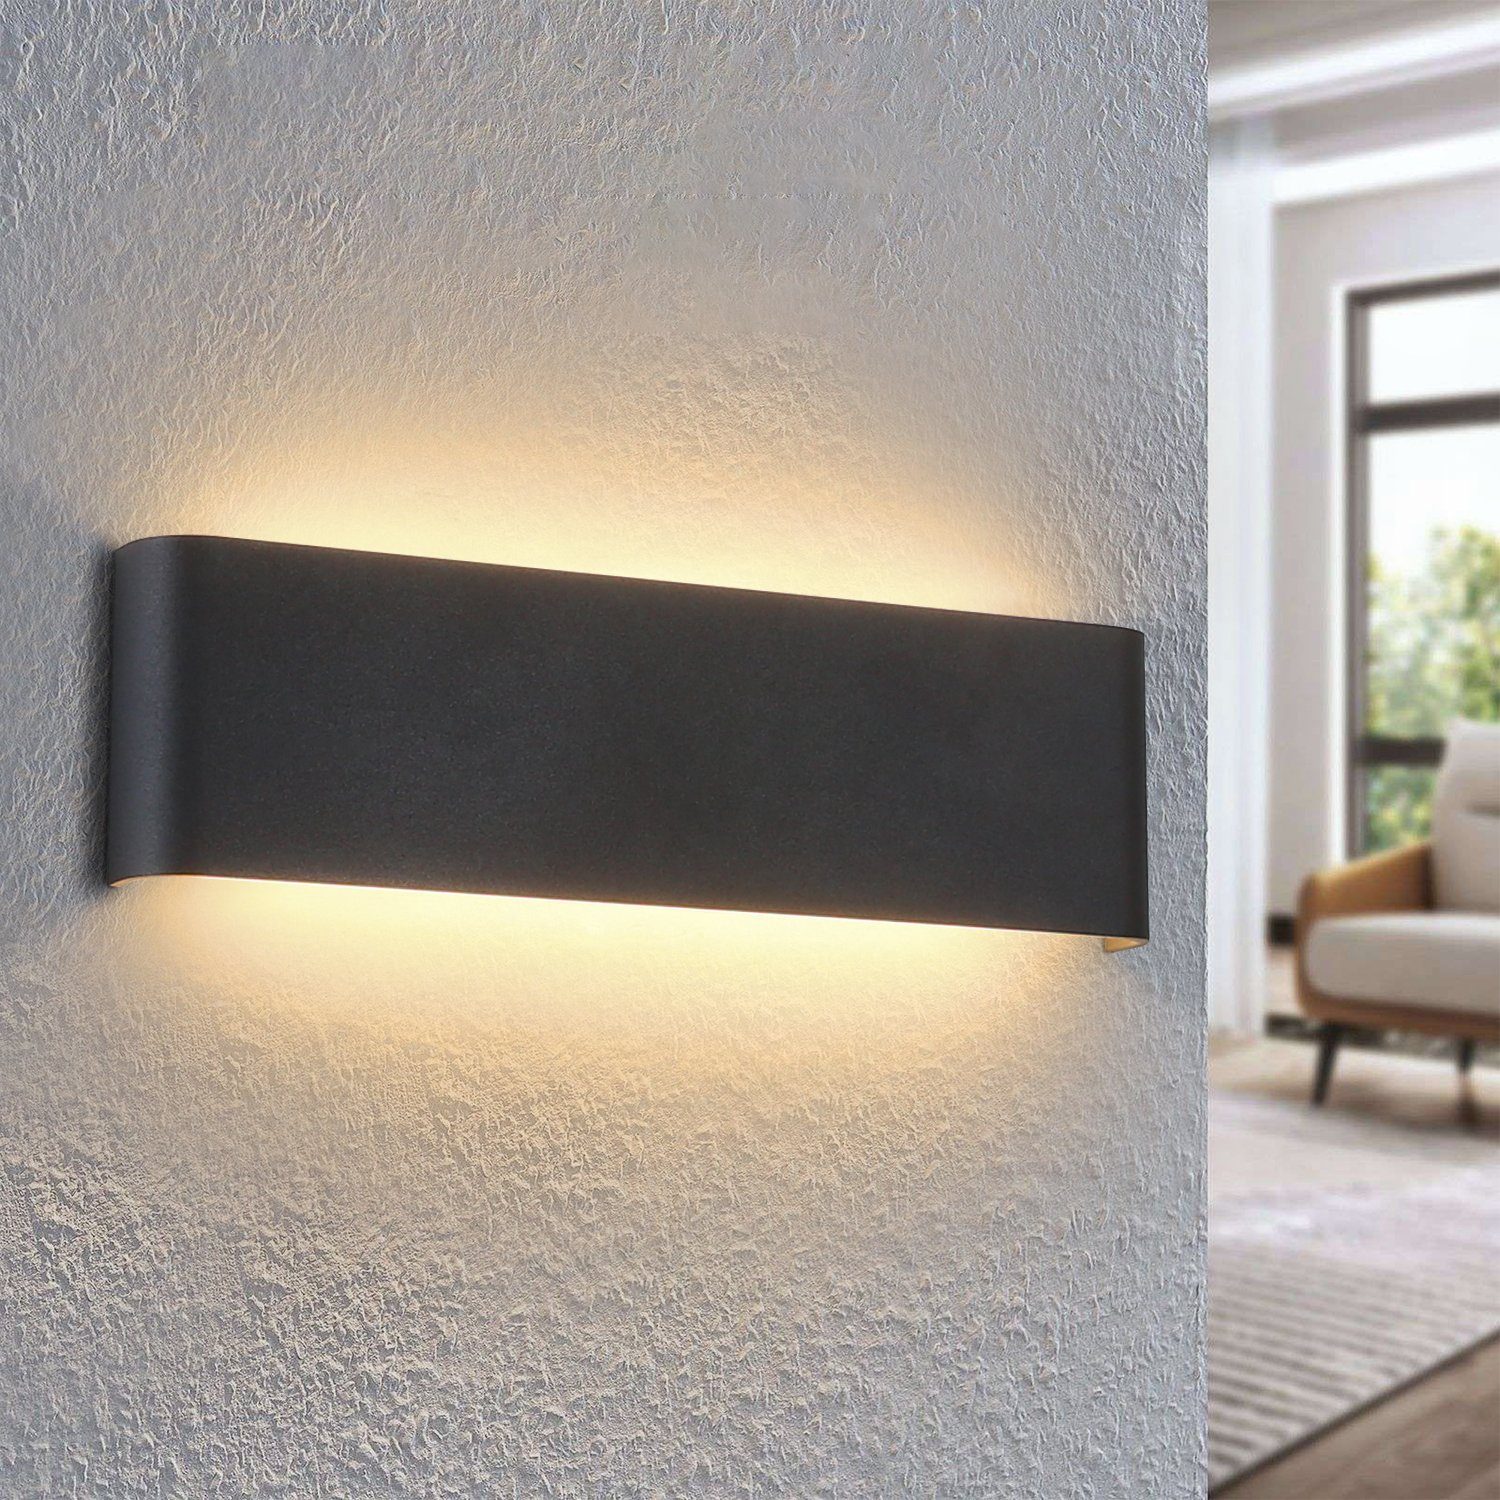 12W LED Wandlampe Wandbeleuchtung Wandleuchte Wohnzimmer Modern Warmweiß IP65 